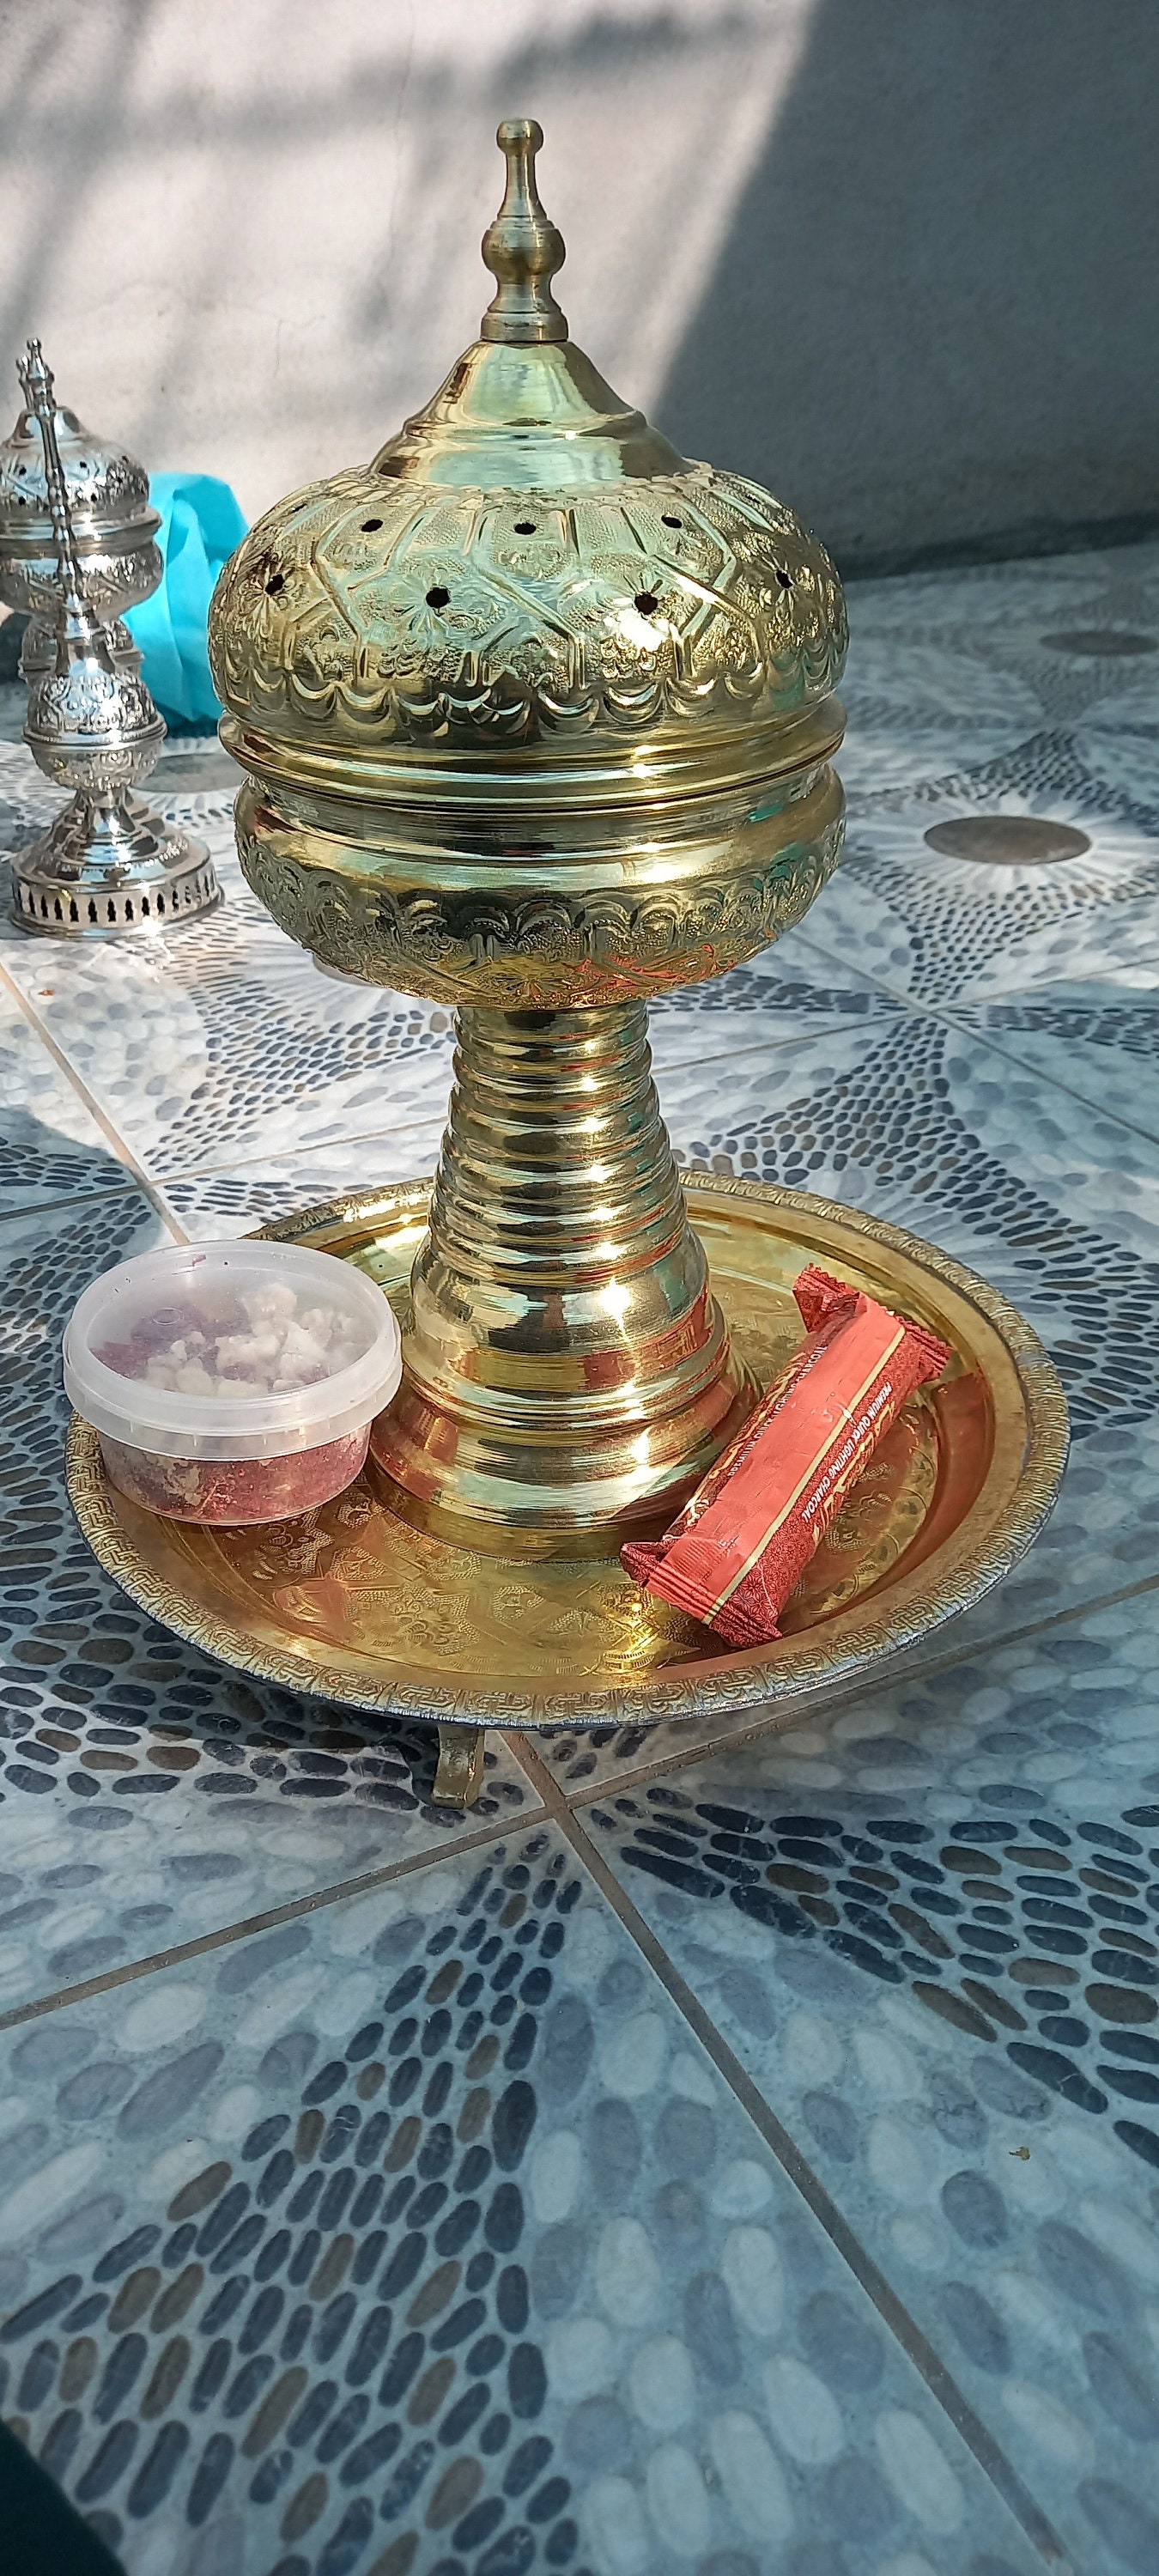 Home Perfume Pod by Perfume Hut, Electric Bakhoor Burner Arabic, Islam, Gift